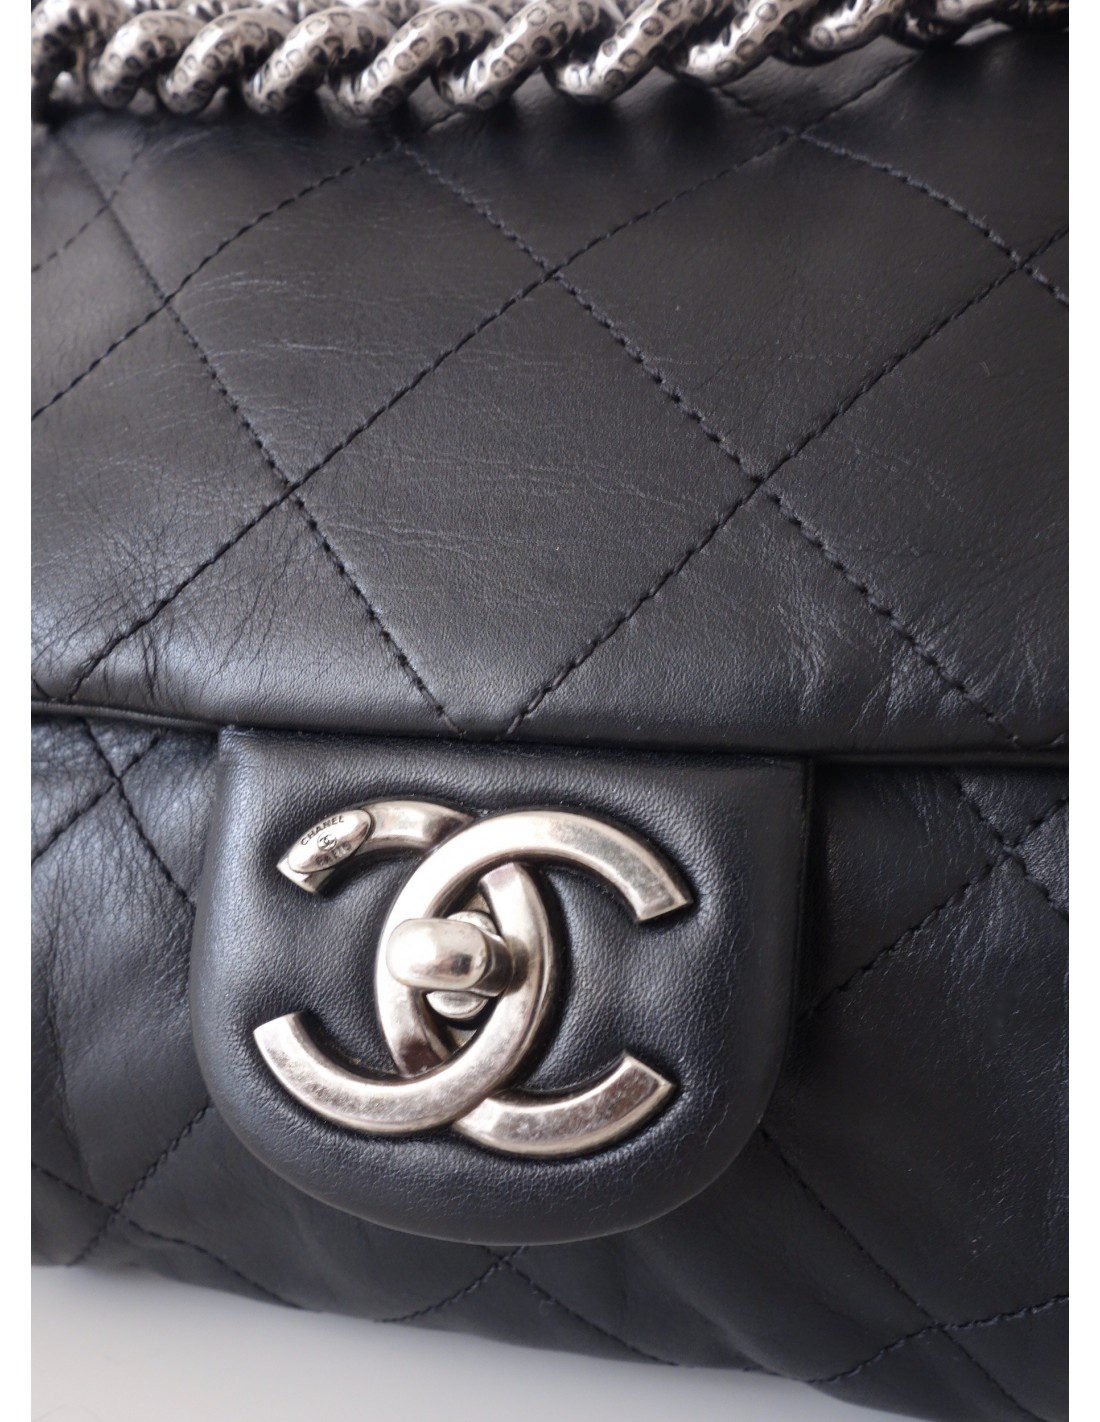 CHANEL messenger bag in black quilted smooth leather  VALOIS VINTAGE PARIS